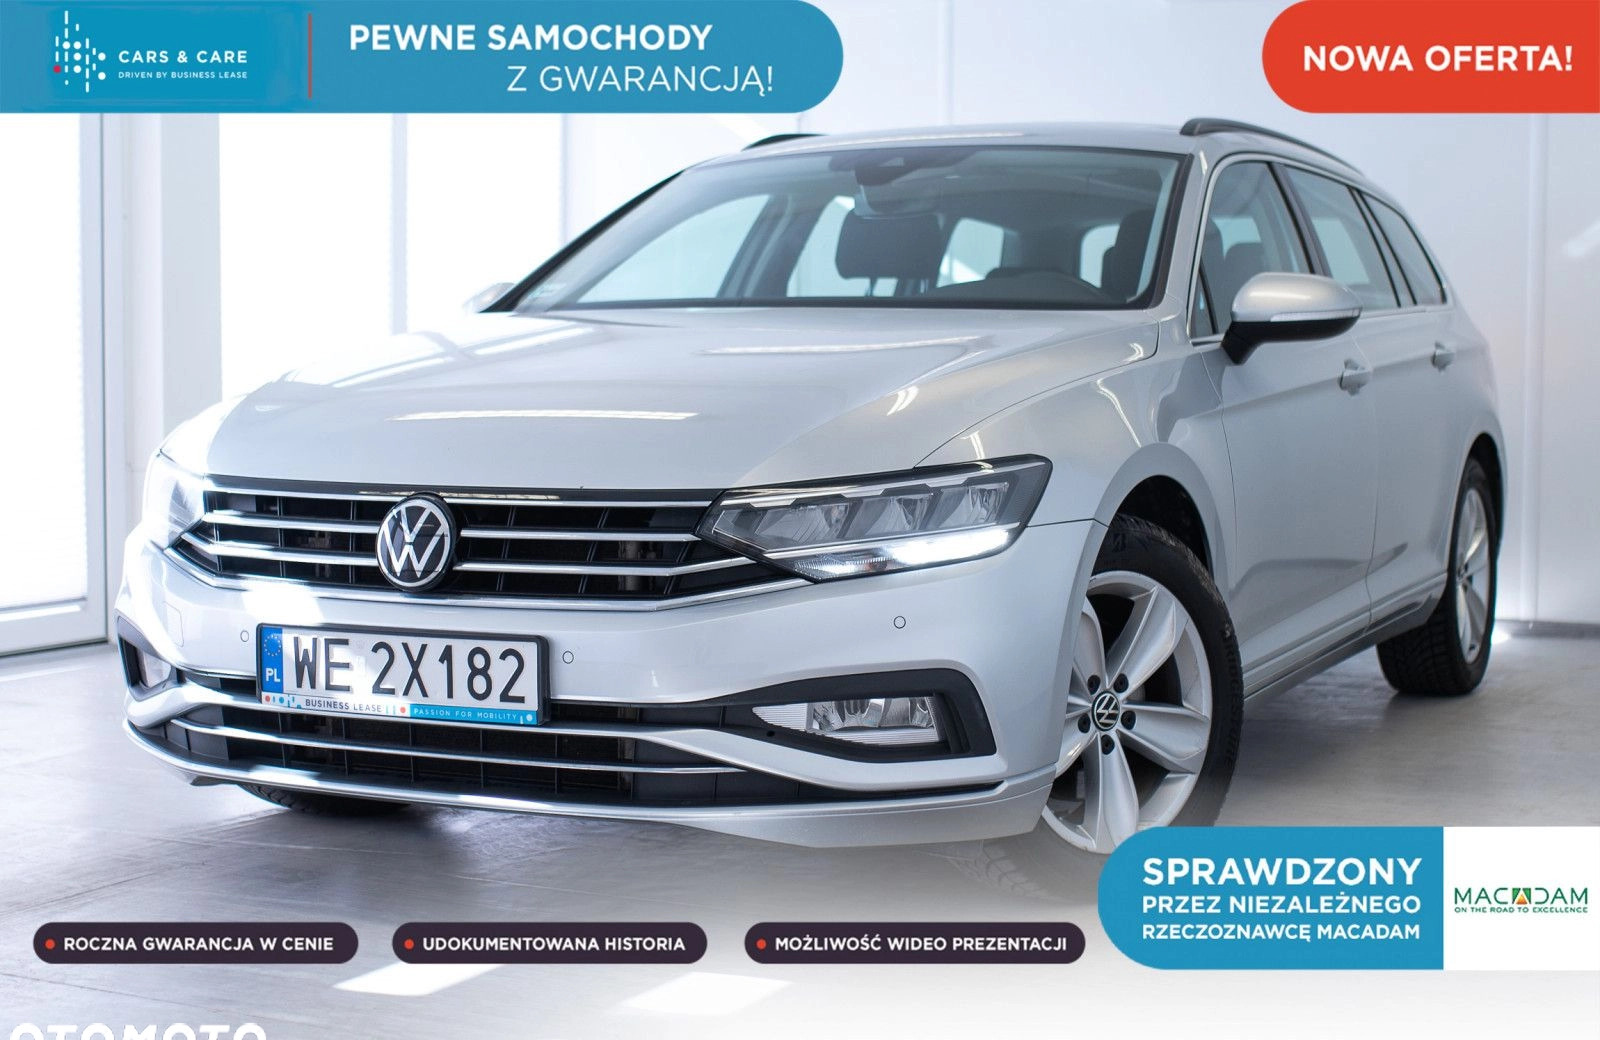 volkswagen Volkswagen Passat cena 98900 przebieg: 131058, rok produkcji 2021 z Tuliszków